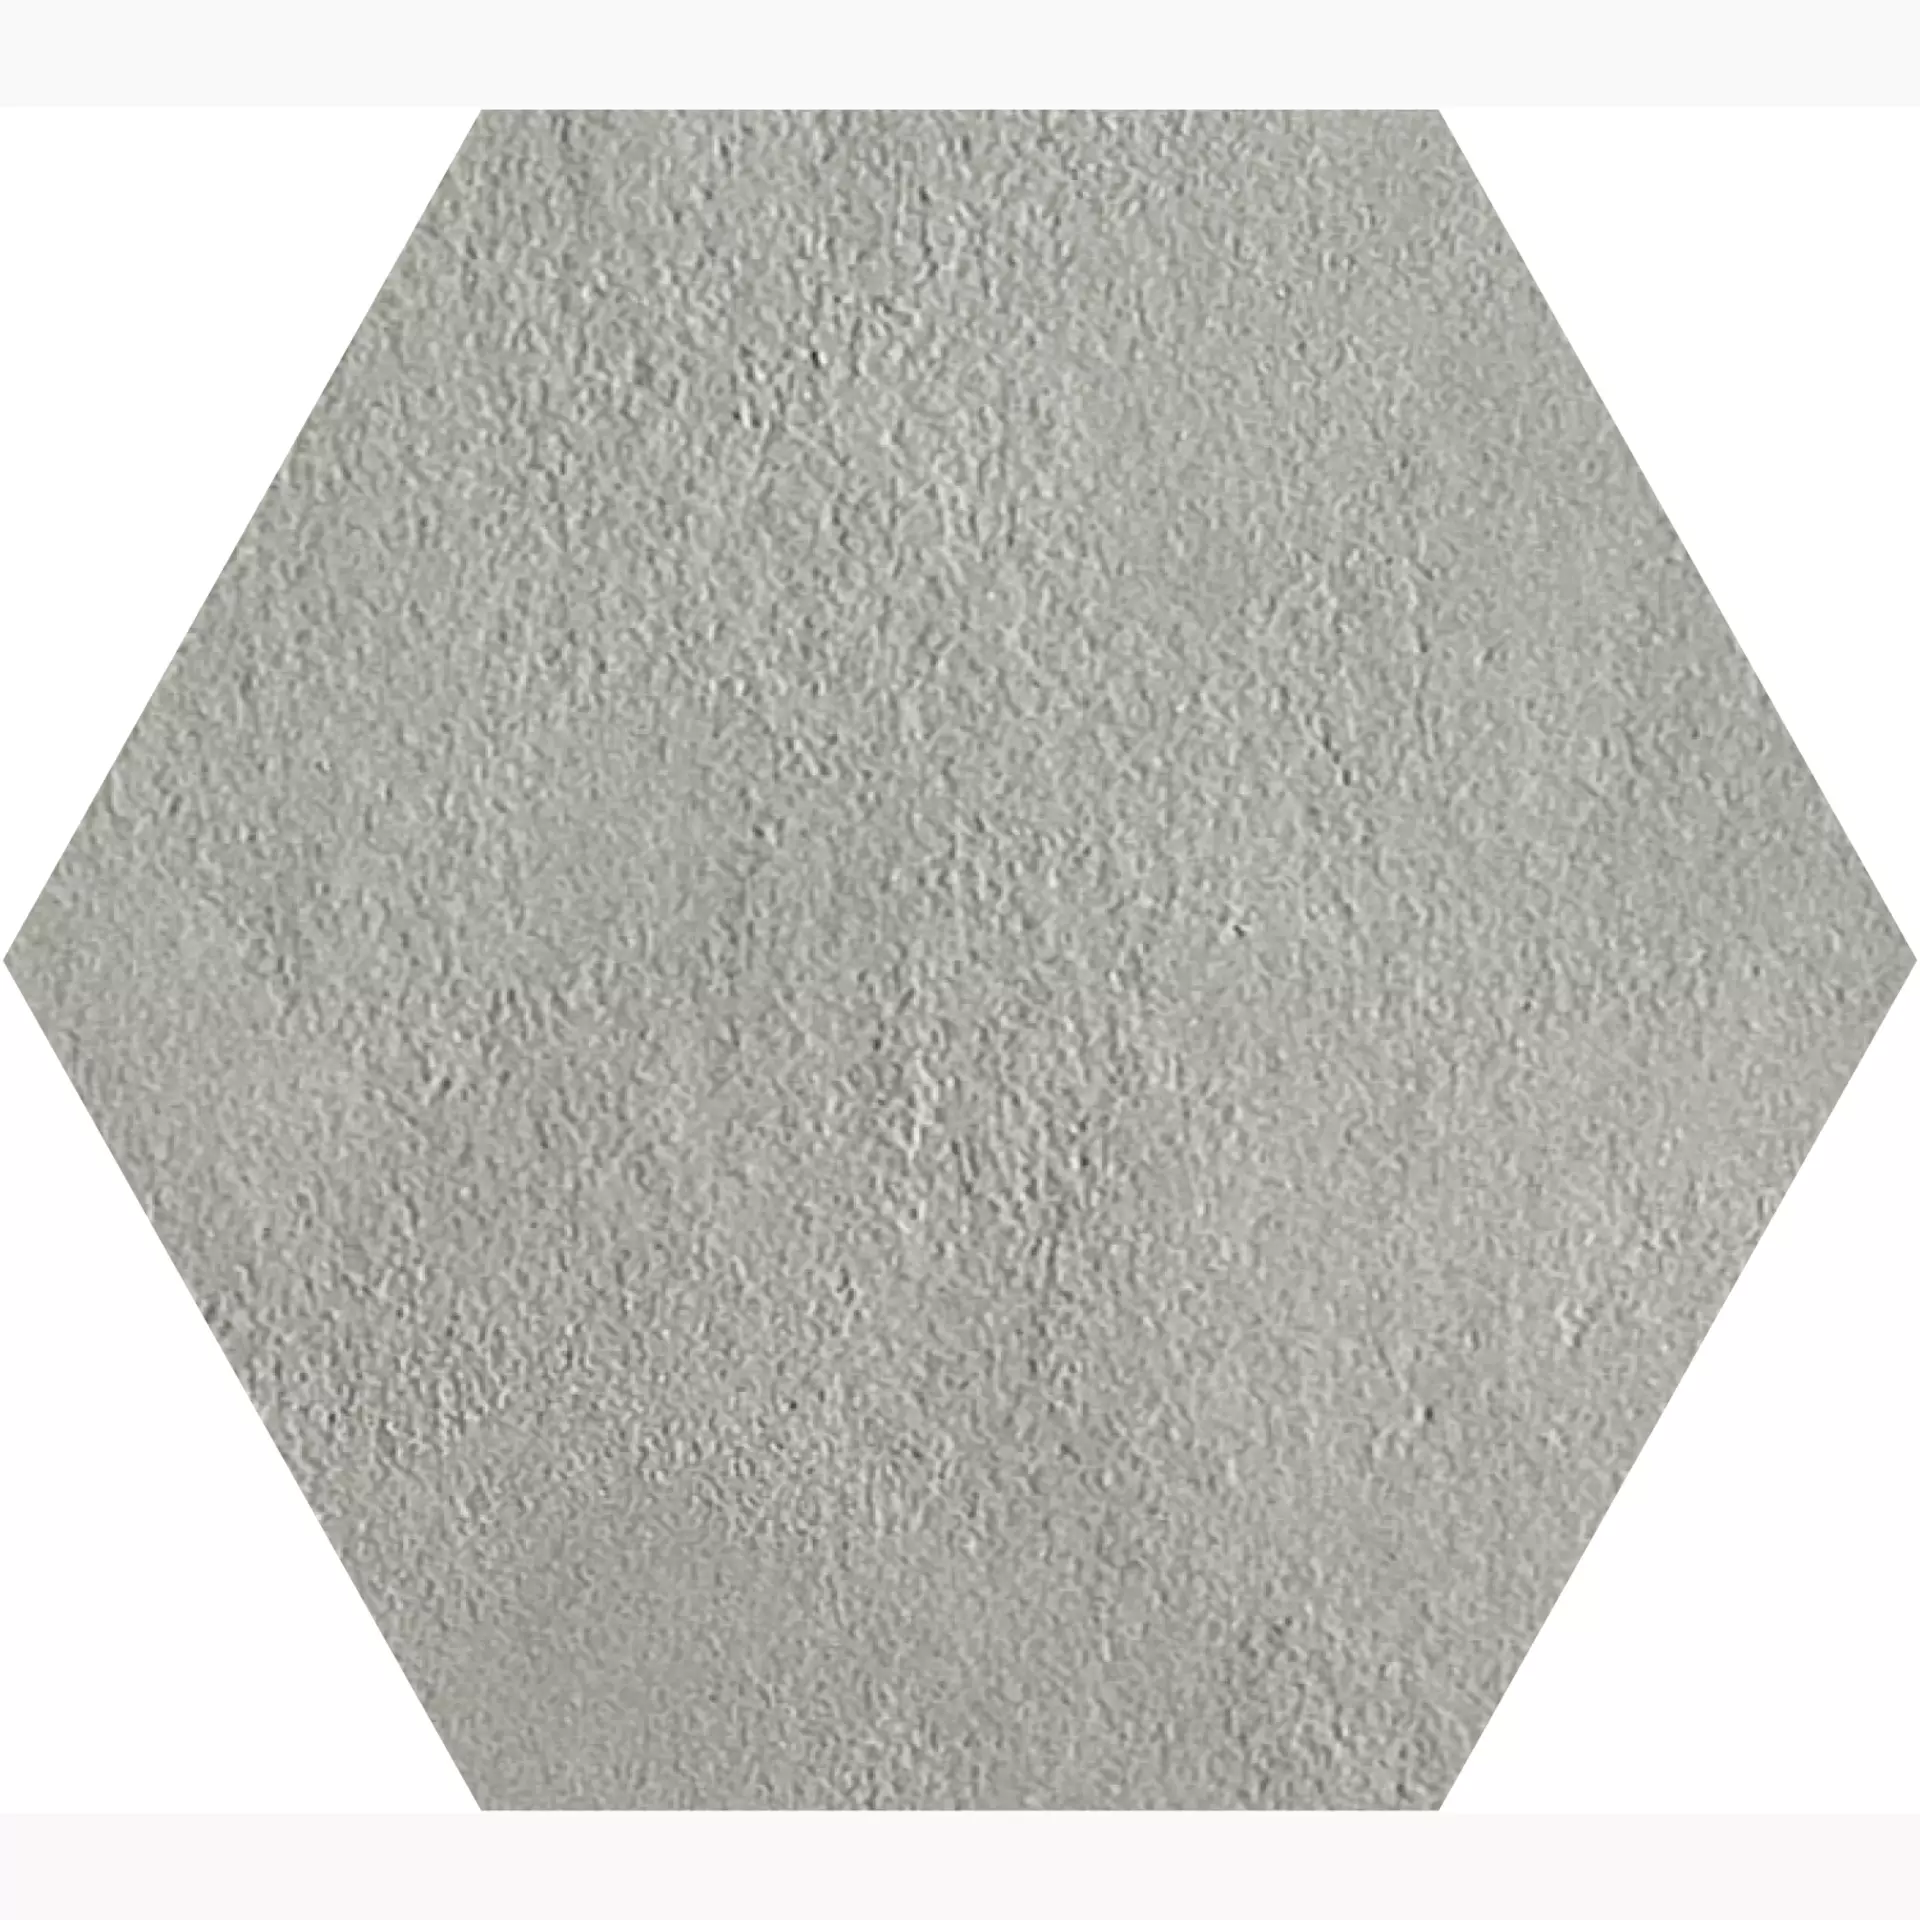 Gigacer Argilla Dry Material Decor Small Hexagon PO9ESADRY 16x18cm 6mm